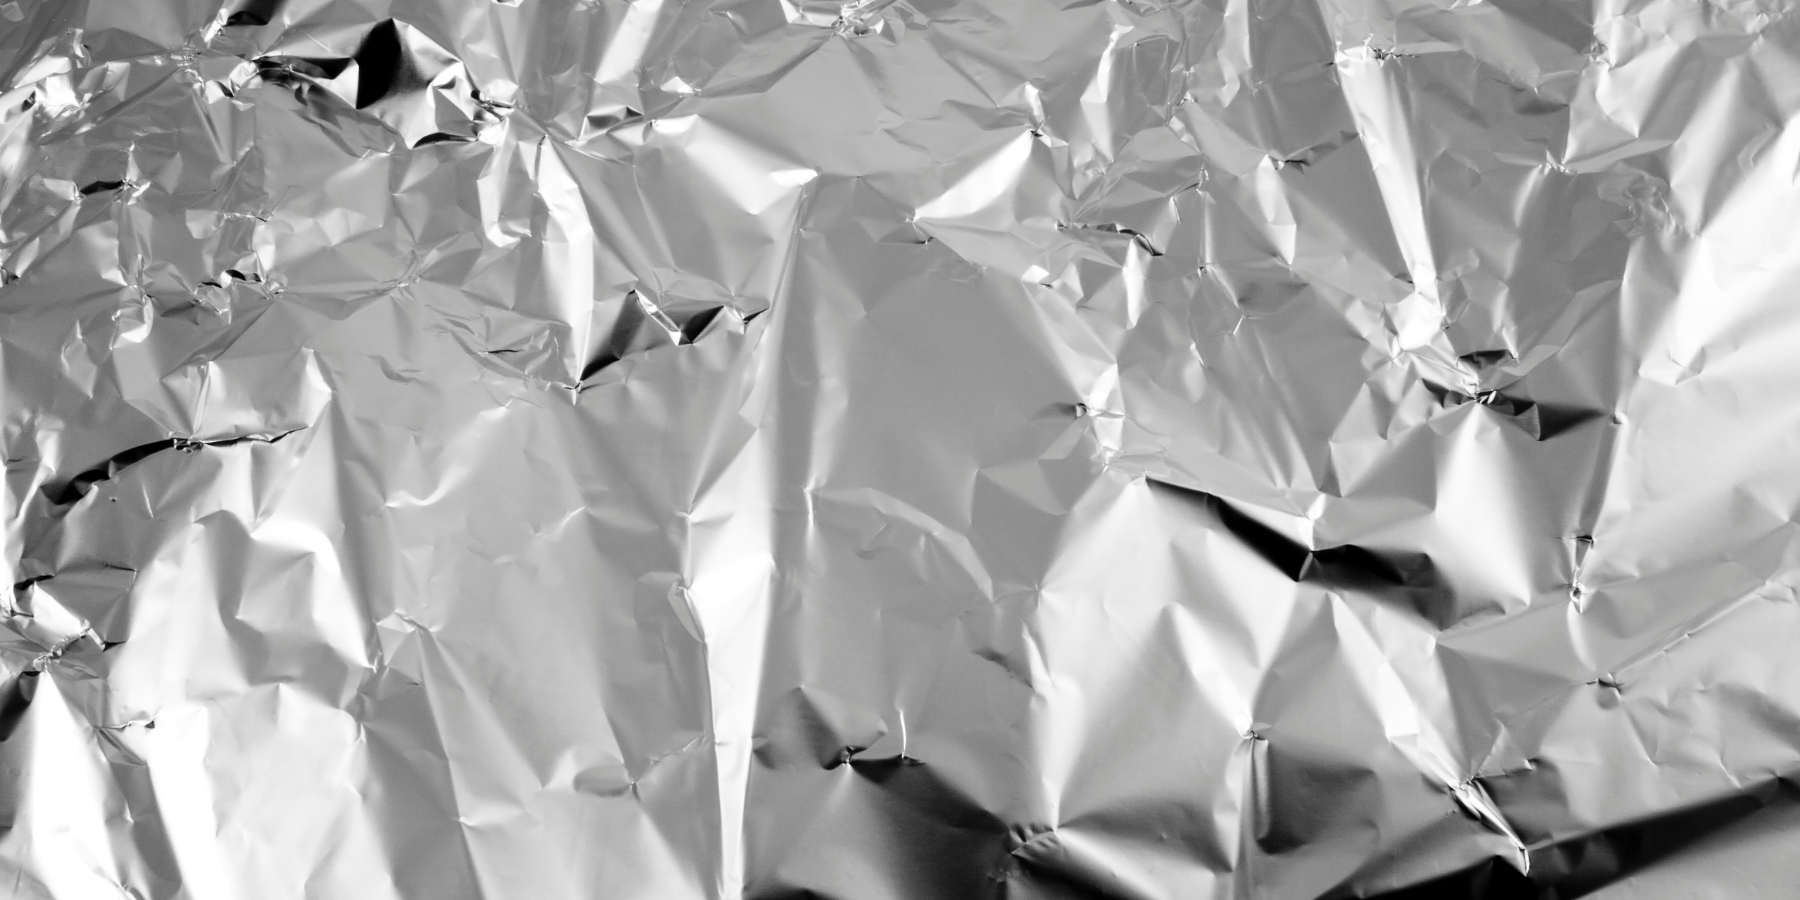 The image shows crumpled aluminum foil.